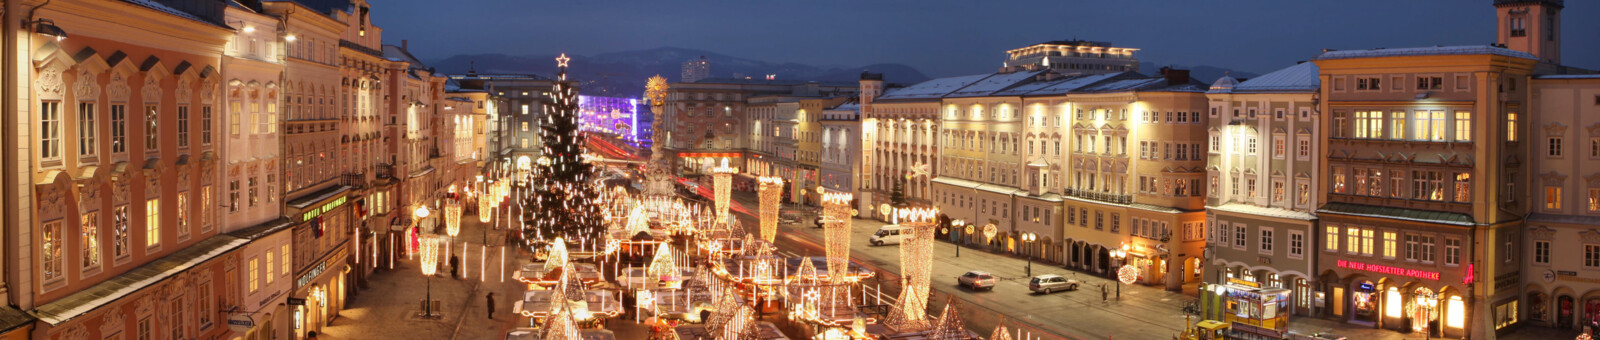     Christmas market on Linz's main square 